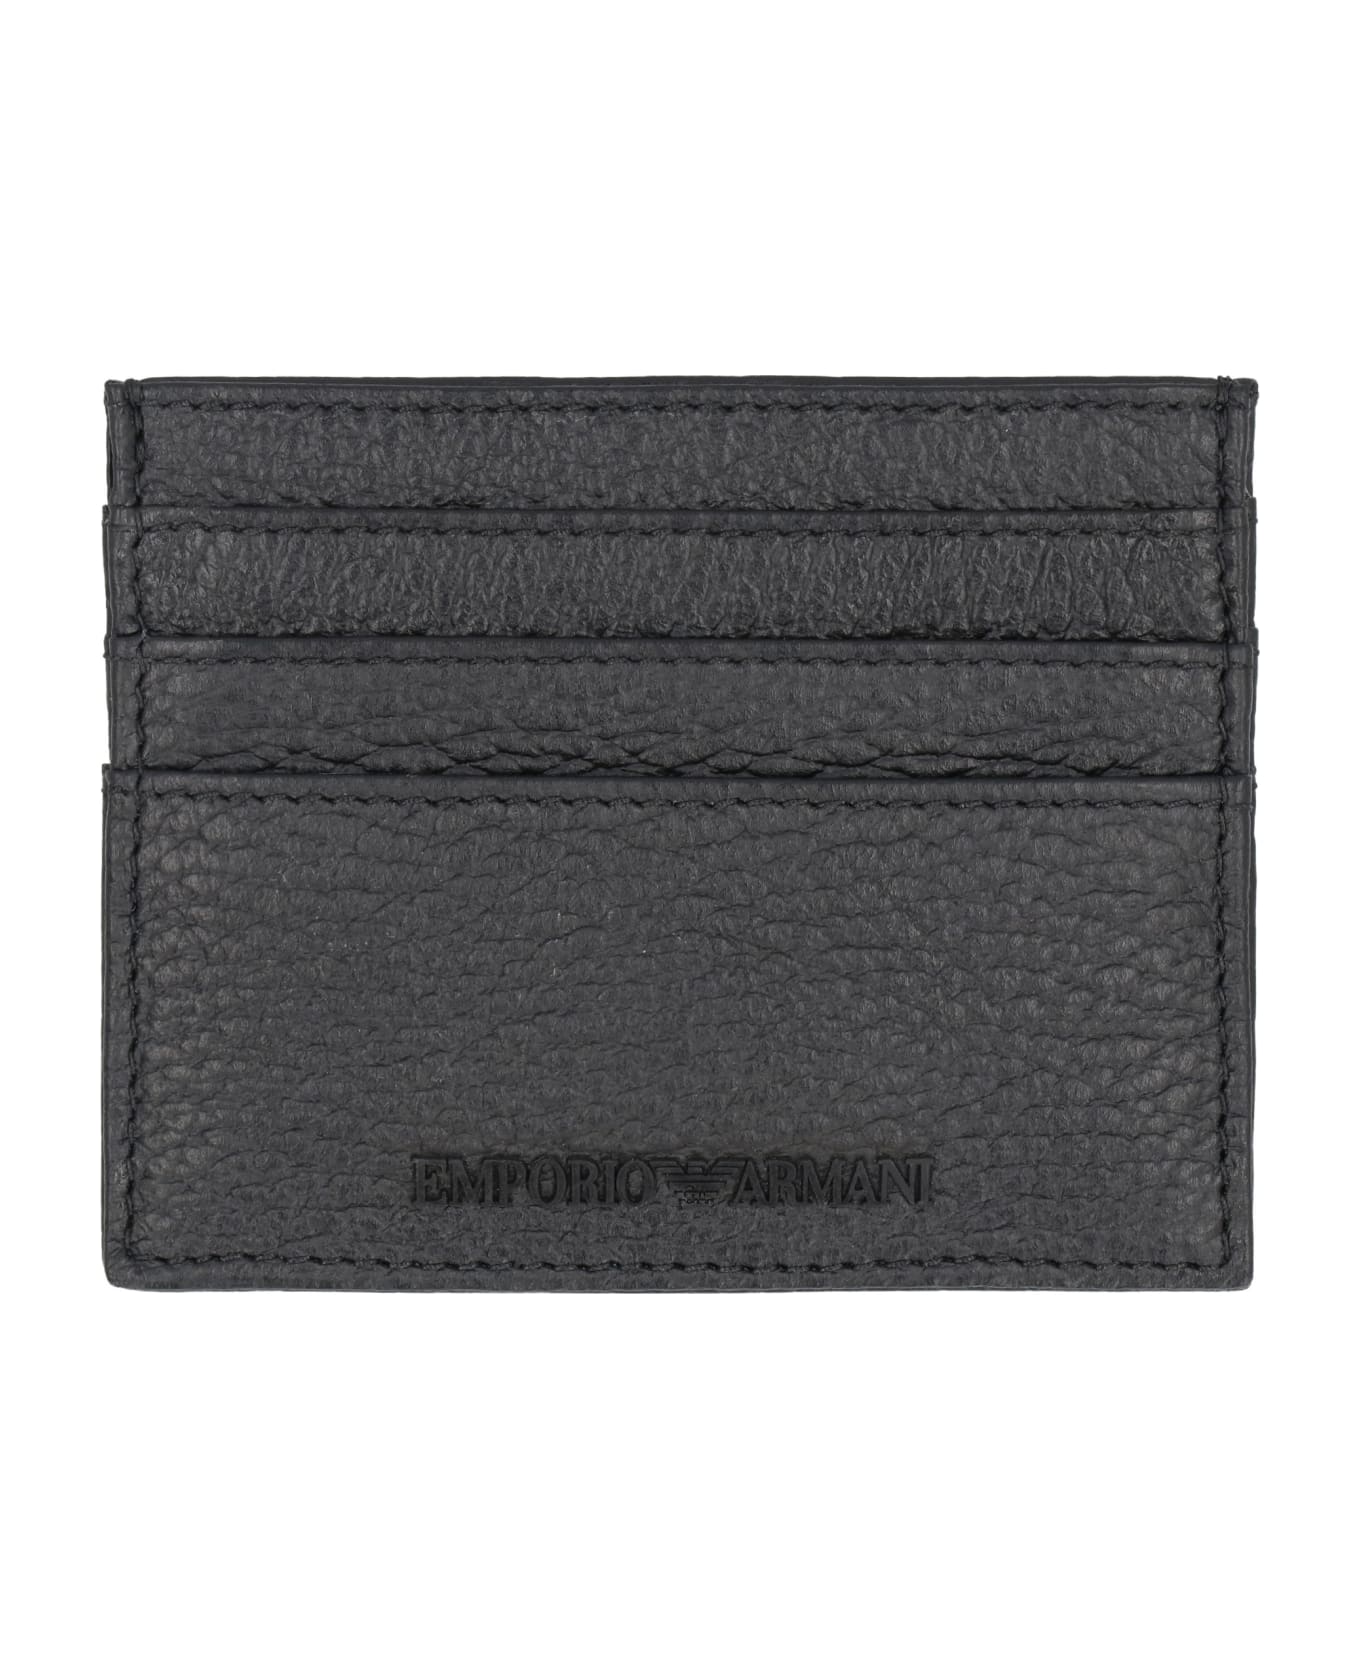 Emporio Armani Leather Card Holder - black